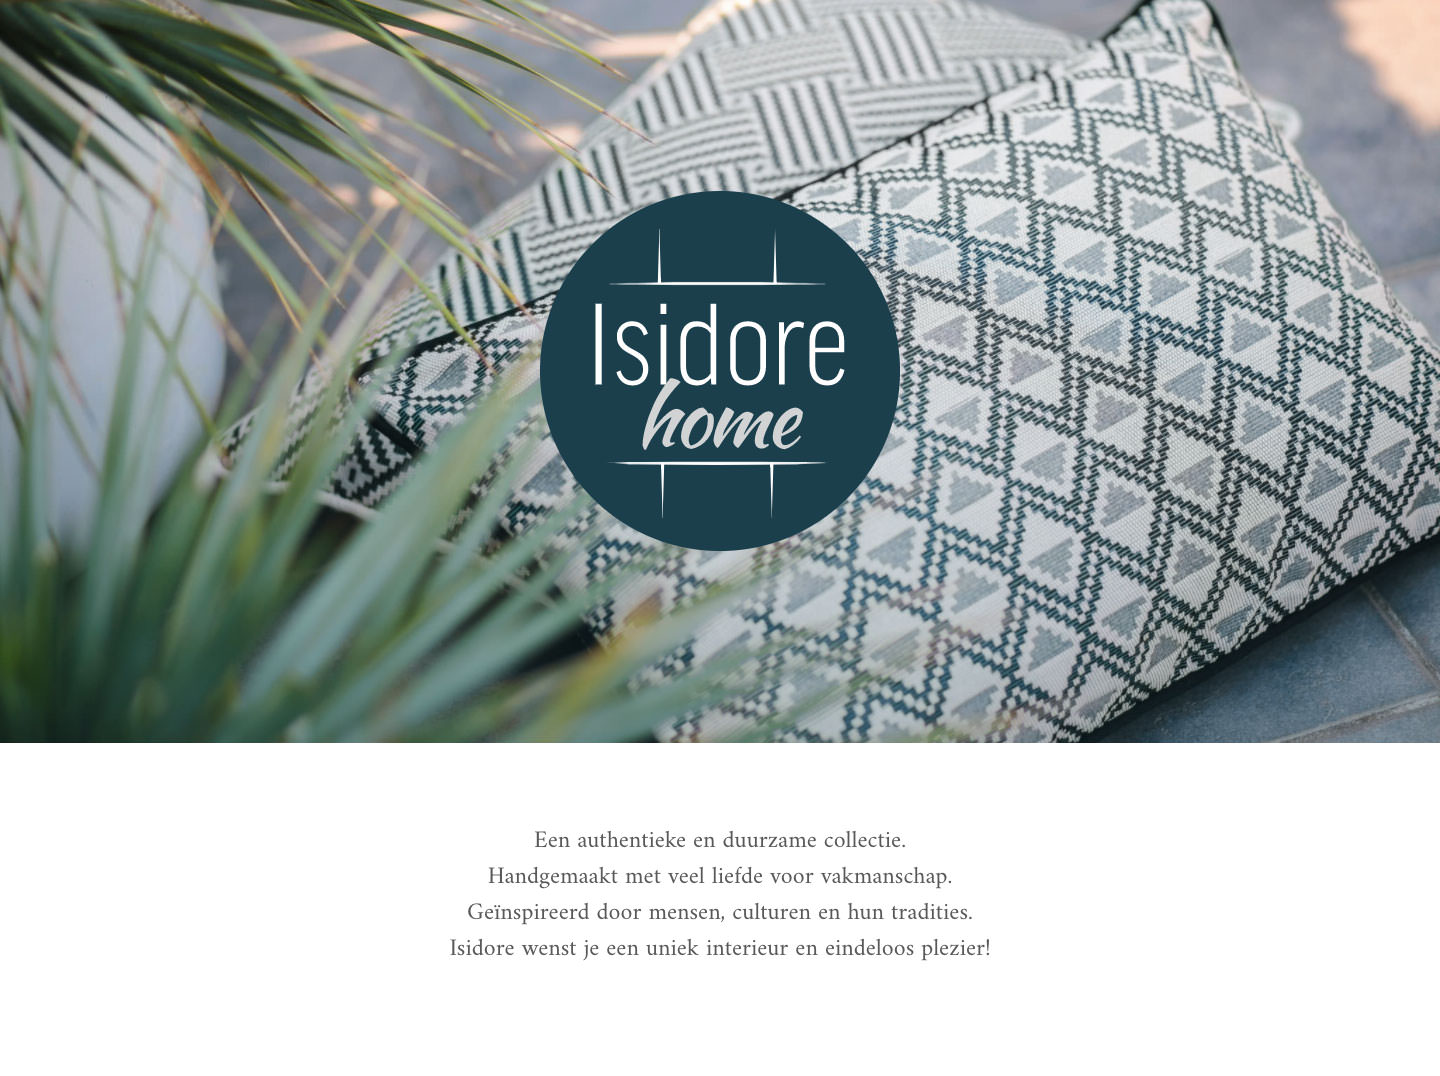 Isidore Home - Corporate Identity & Development of Website